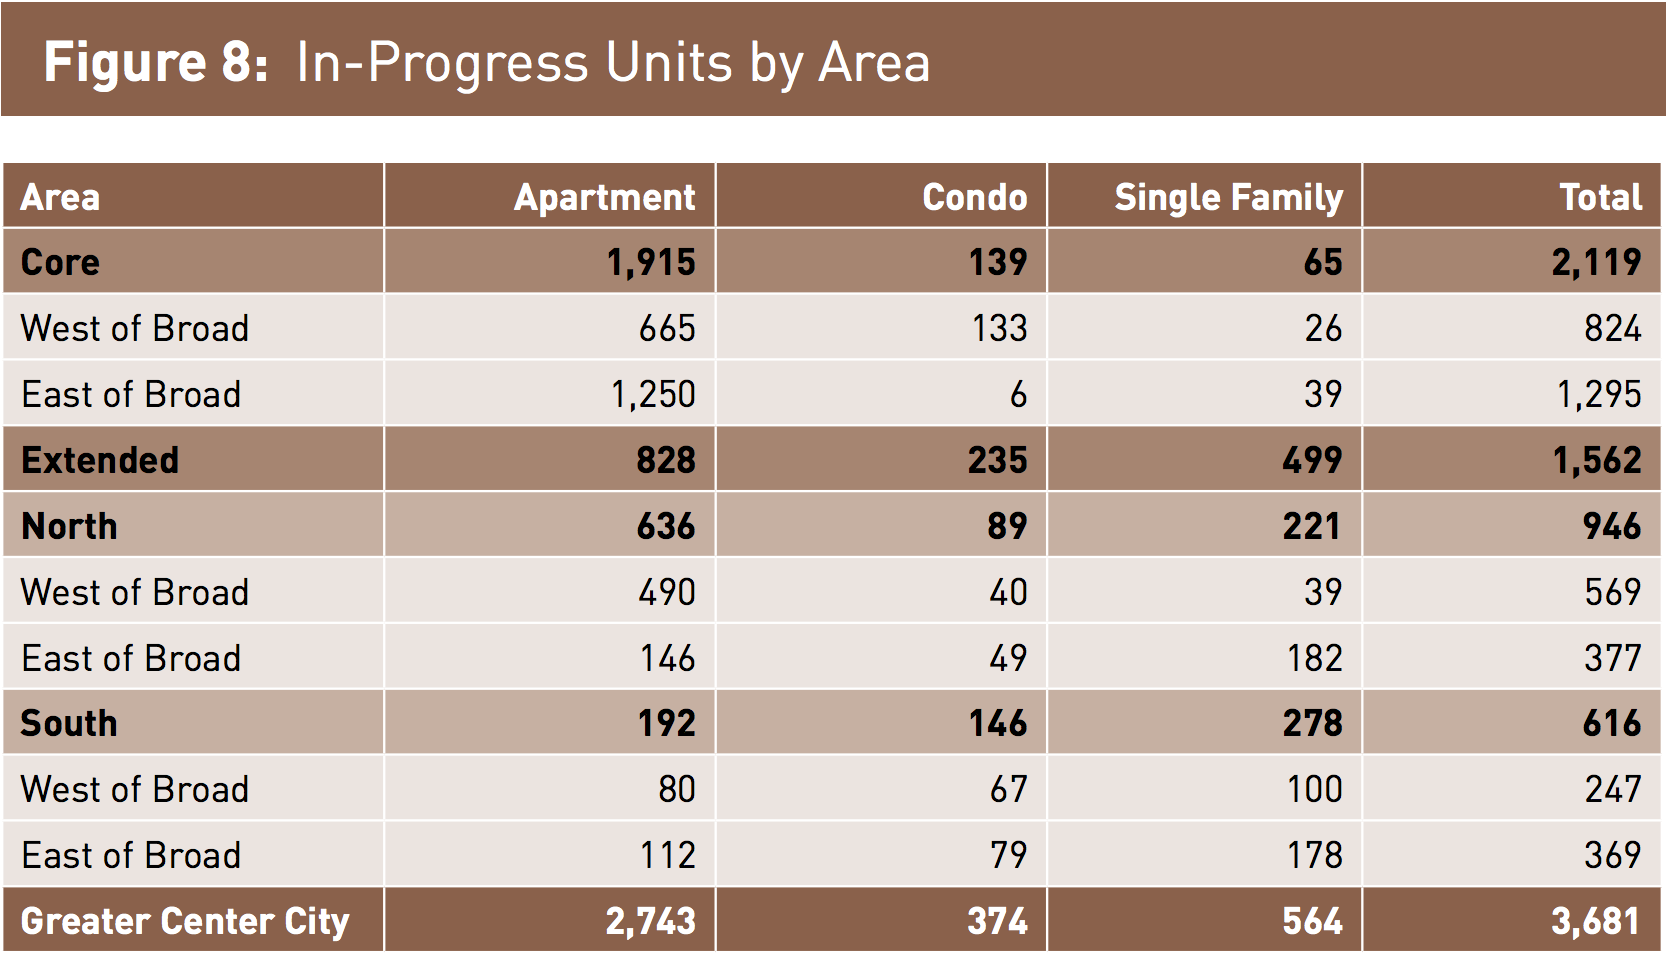 In-Progress Units by Area